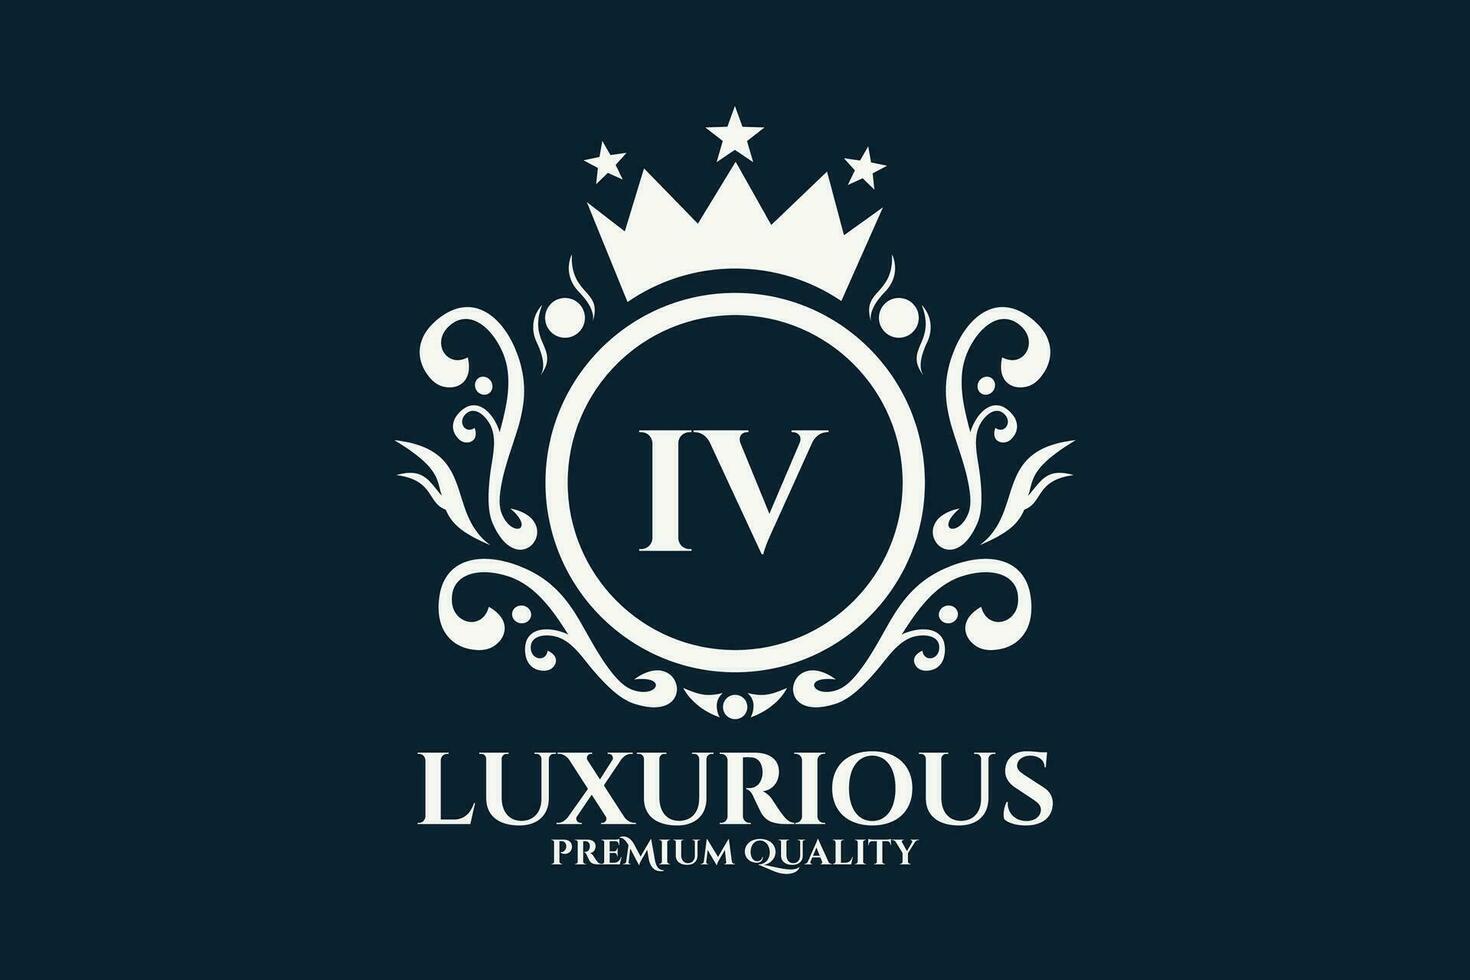 Initial  Letter IV Royal Luxury Logo template in vector art for luxurious branding  vector illustration.